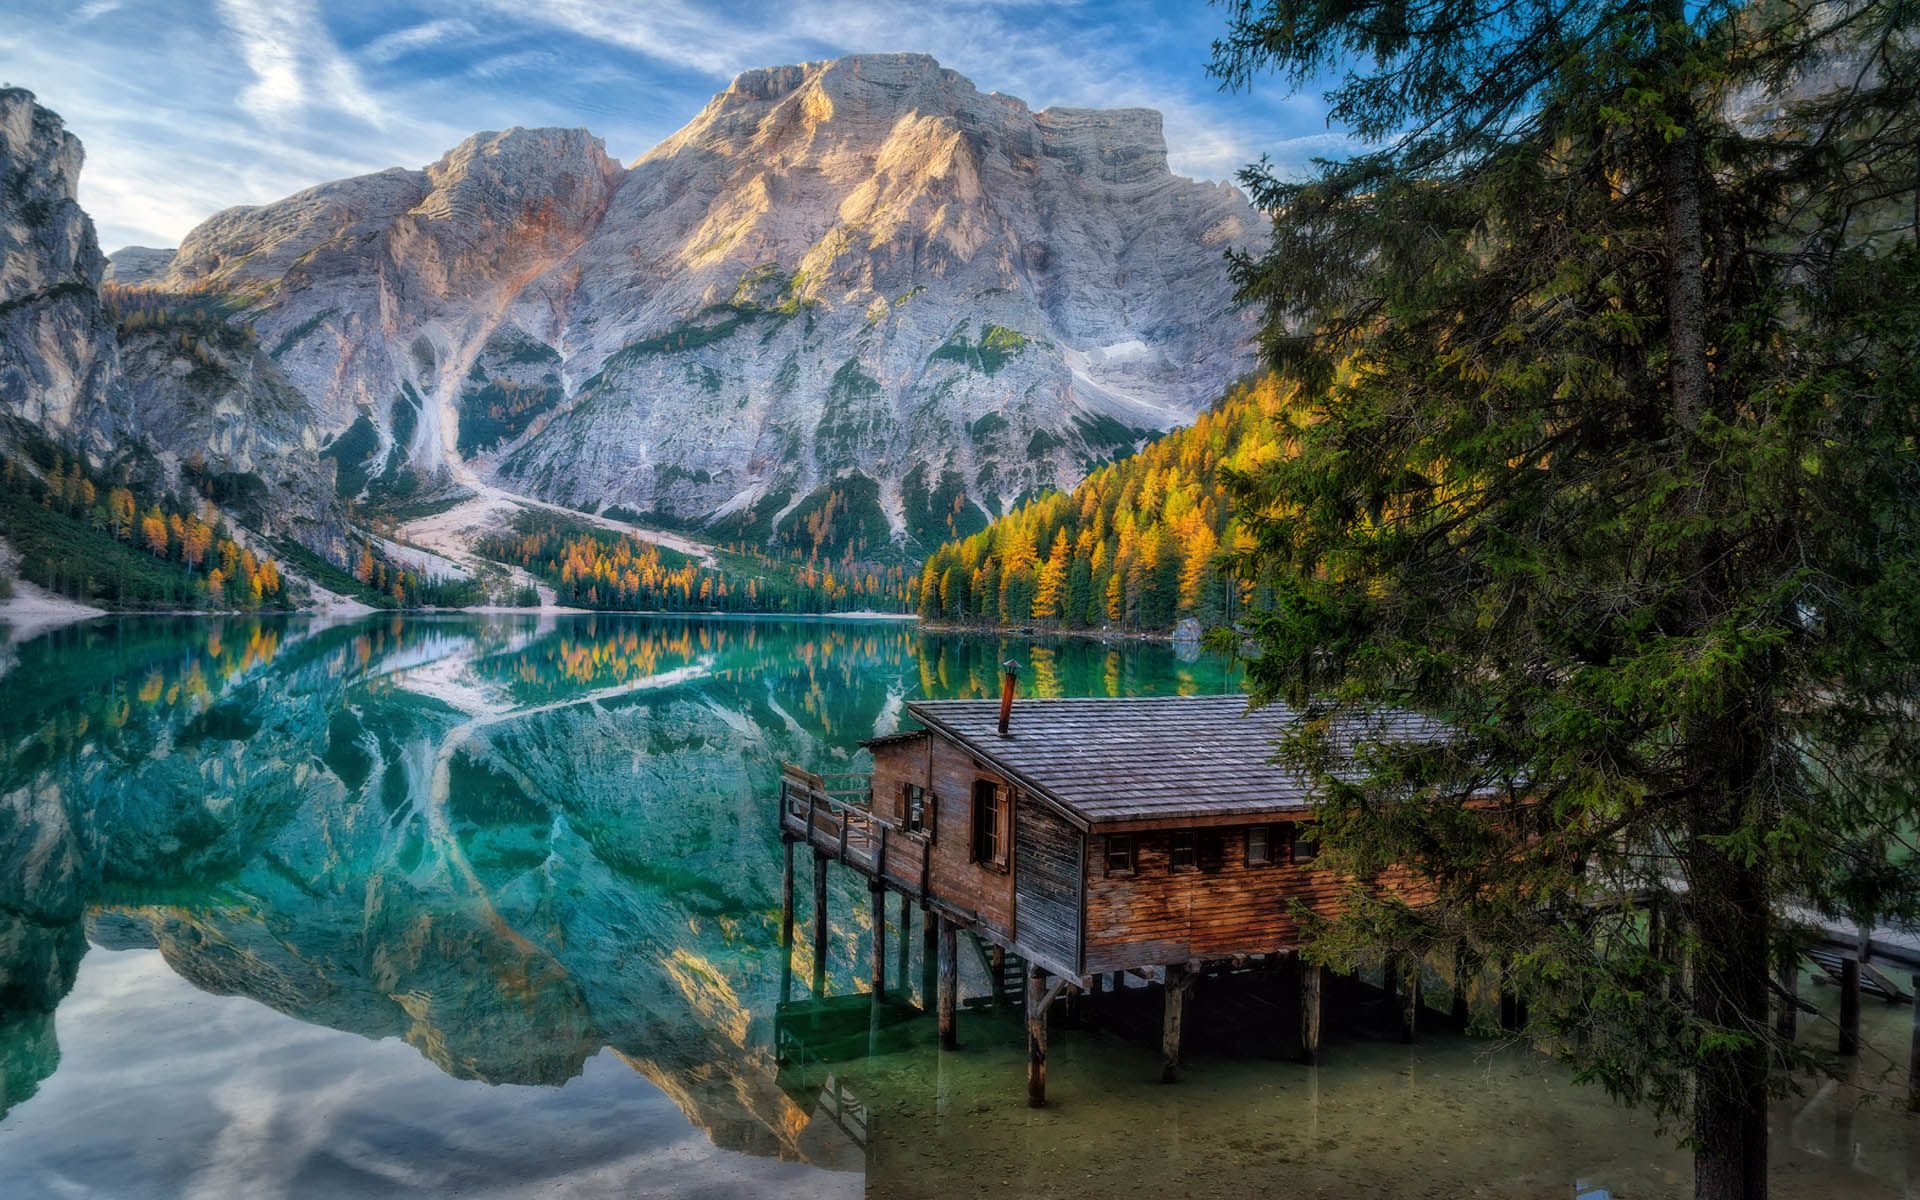 Pragser Wildsee Lake In Lago Di Braies Dolomites Italy Nature